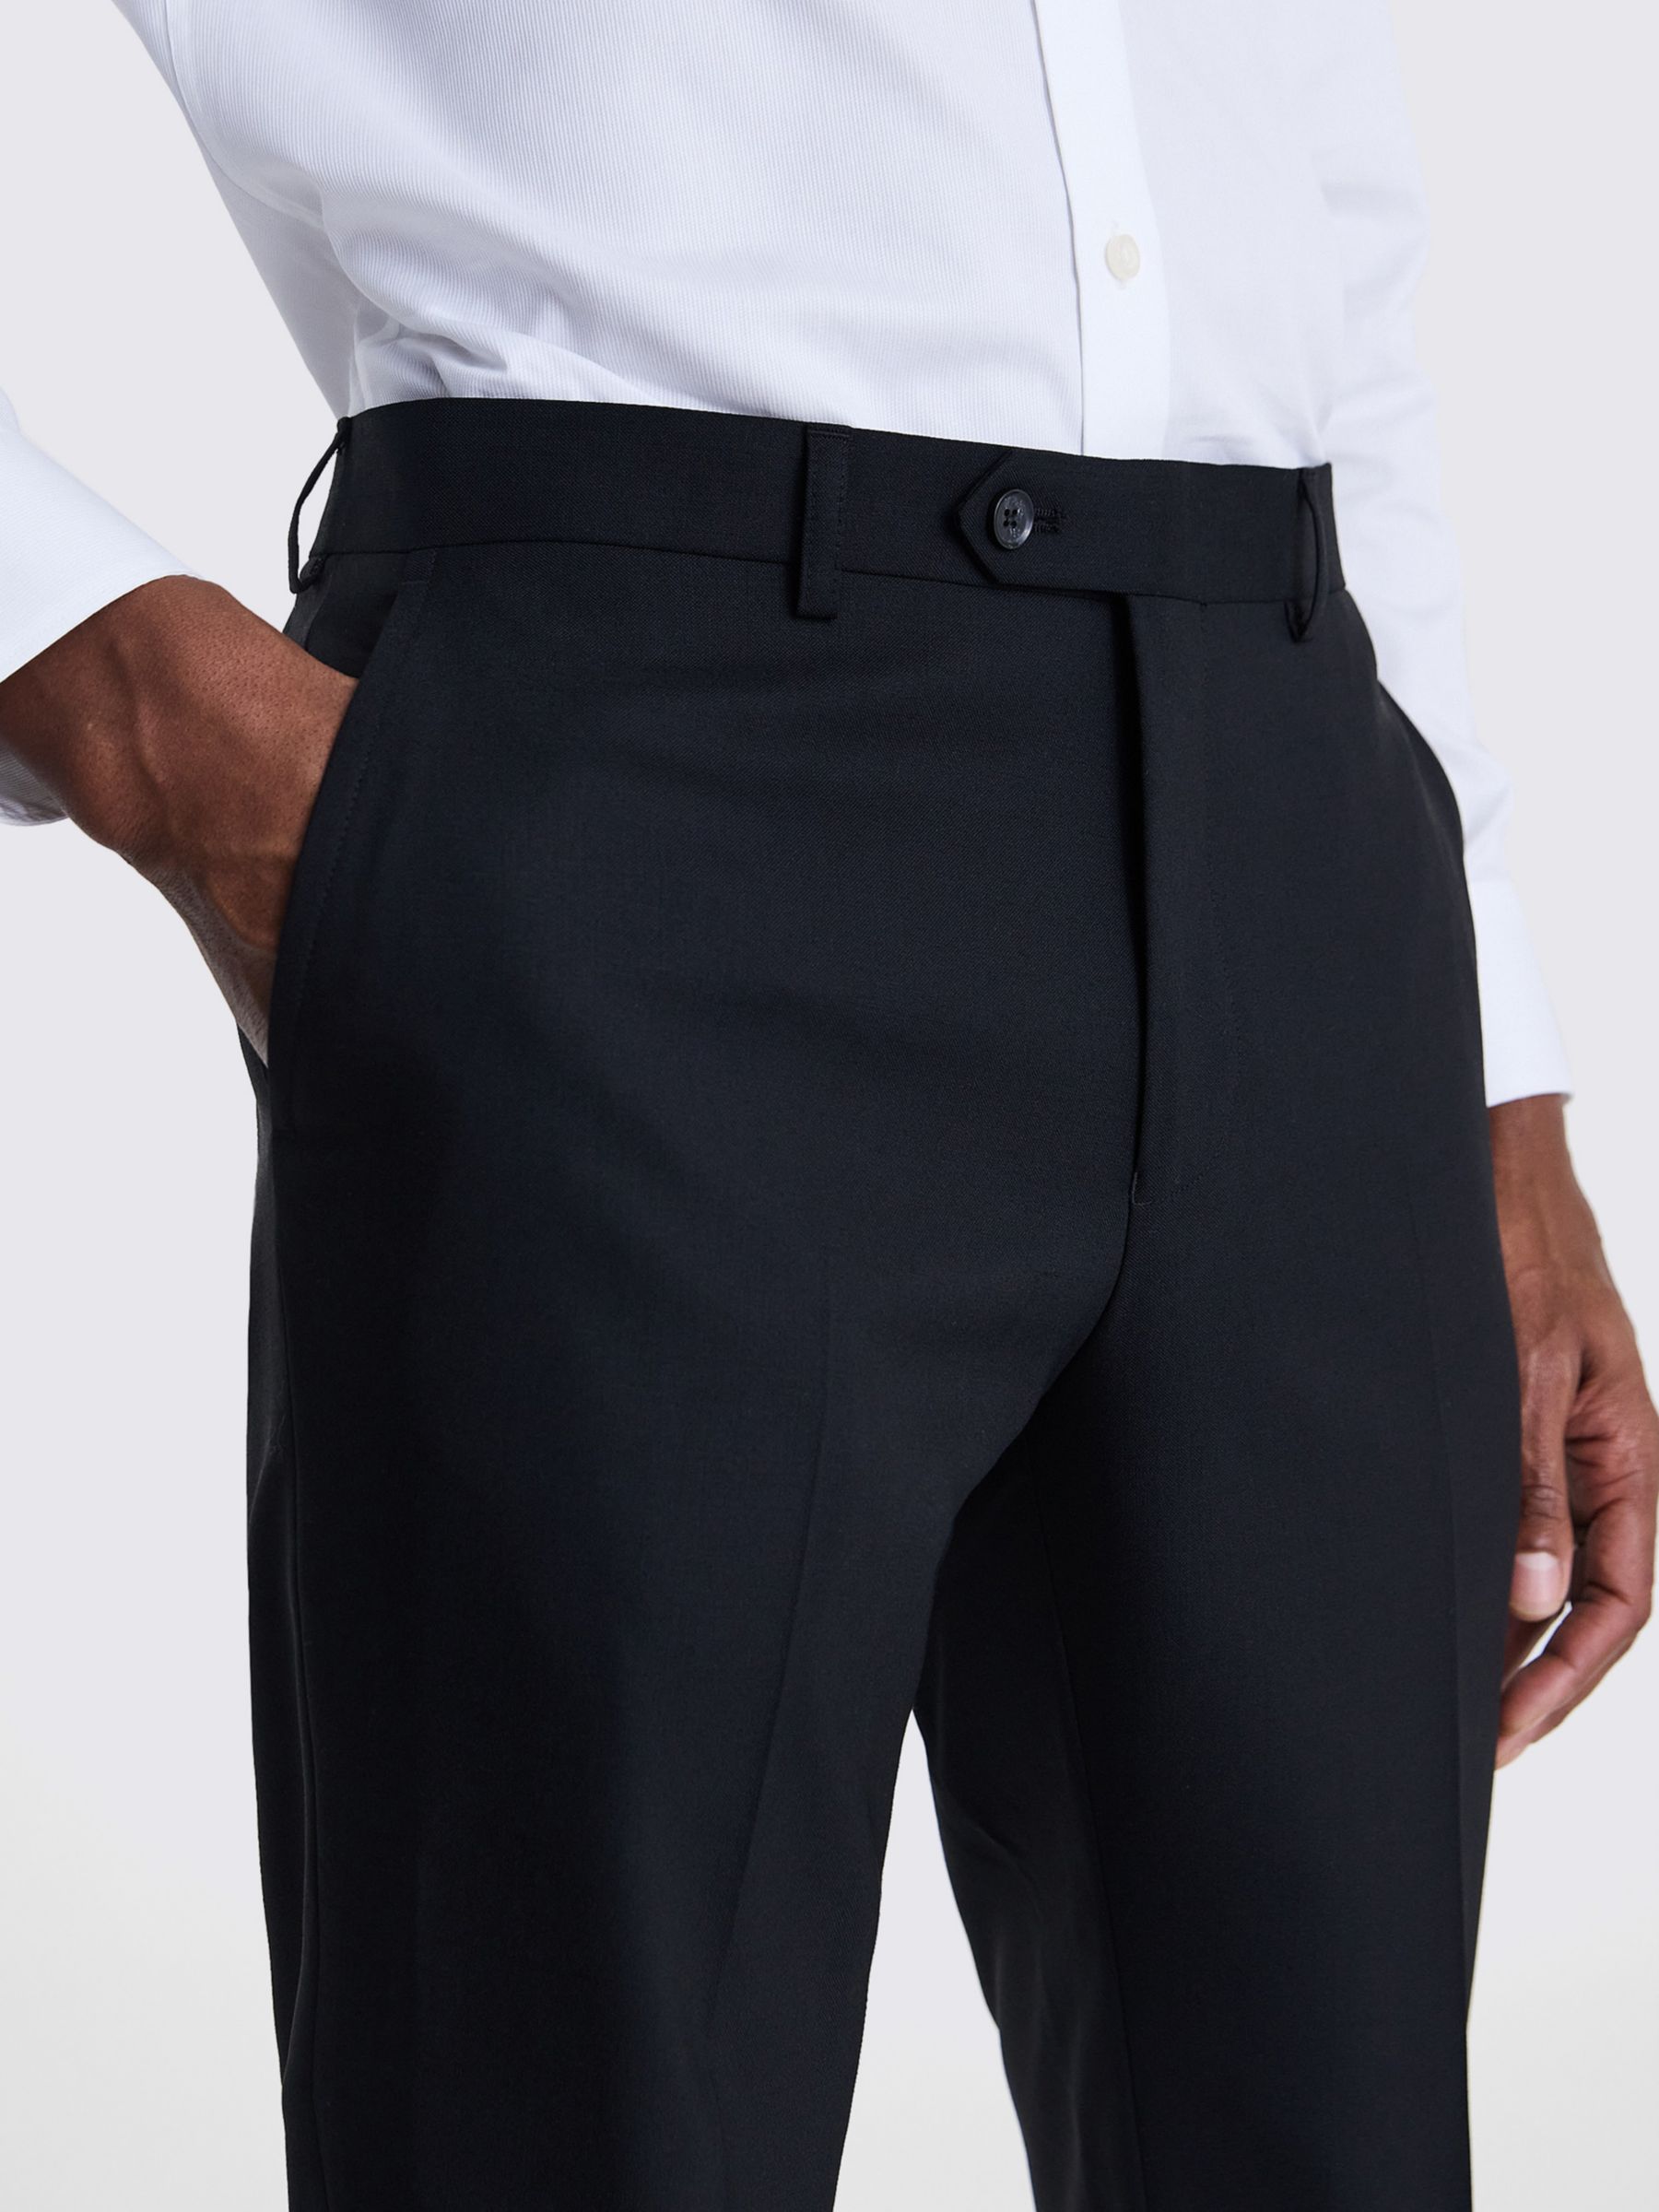 Moss x Barberis Italian Tailored Fit Half Lined Trousers, Black, 30R